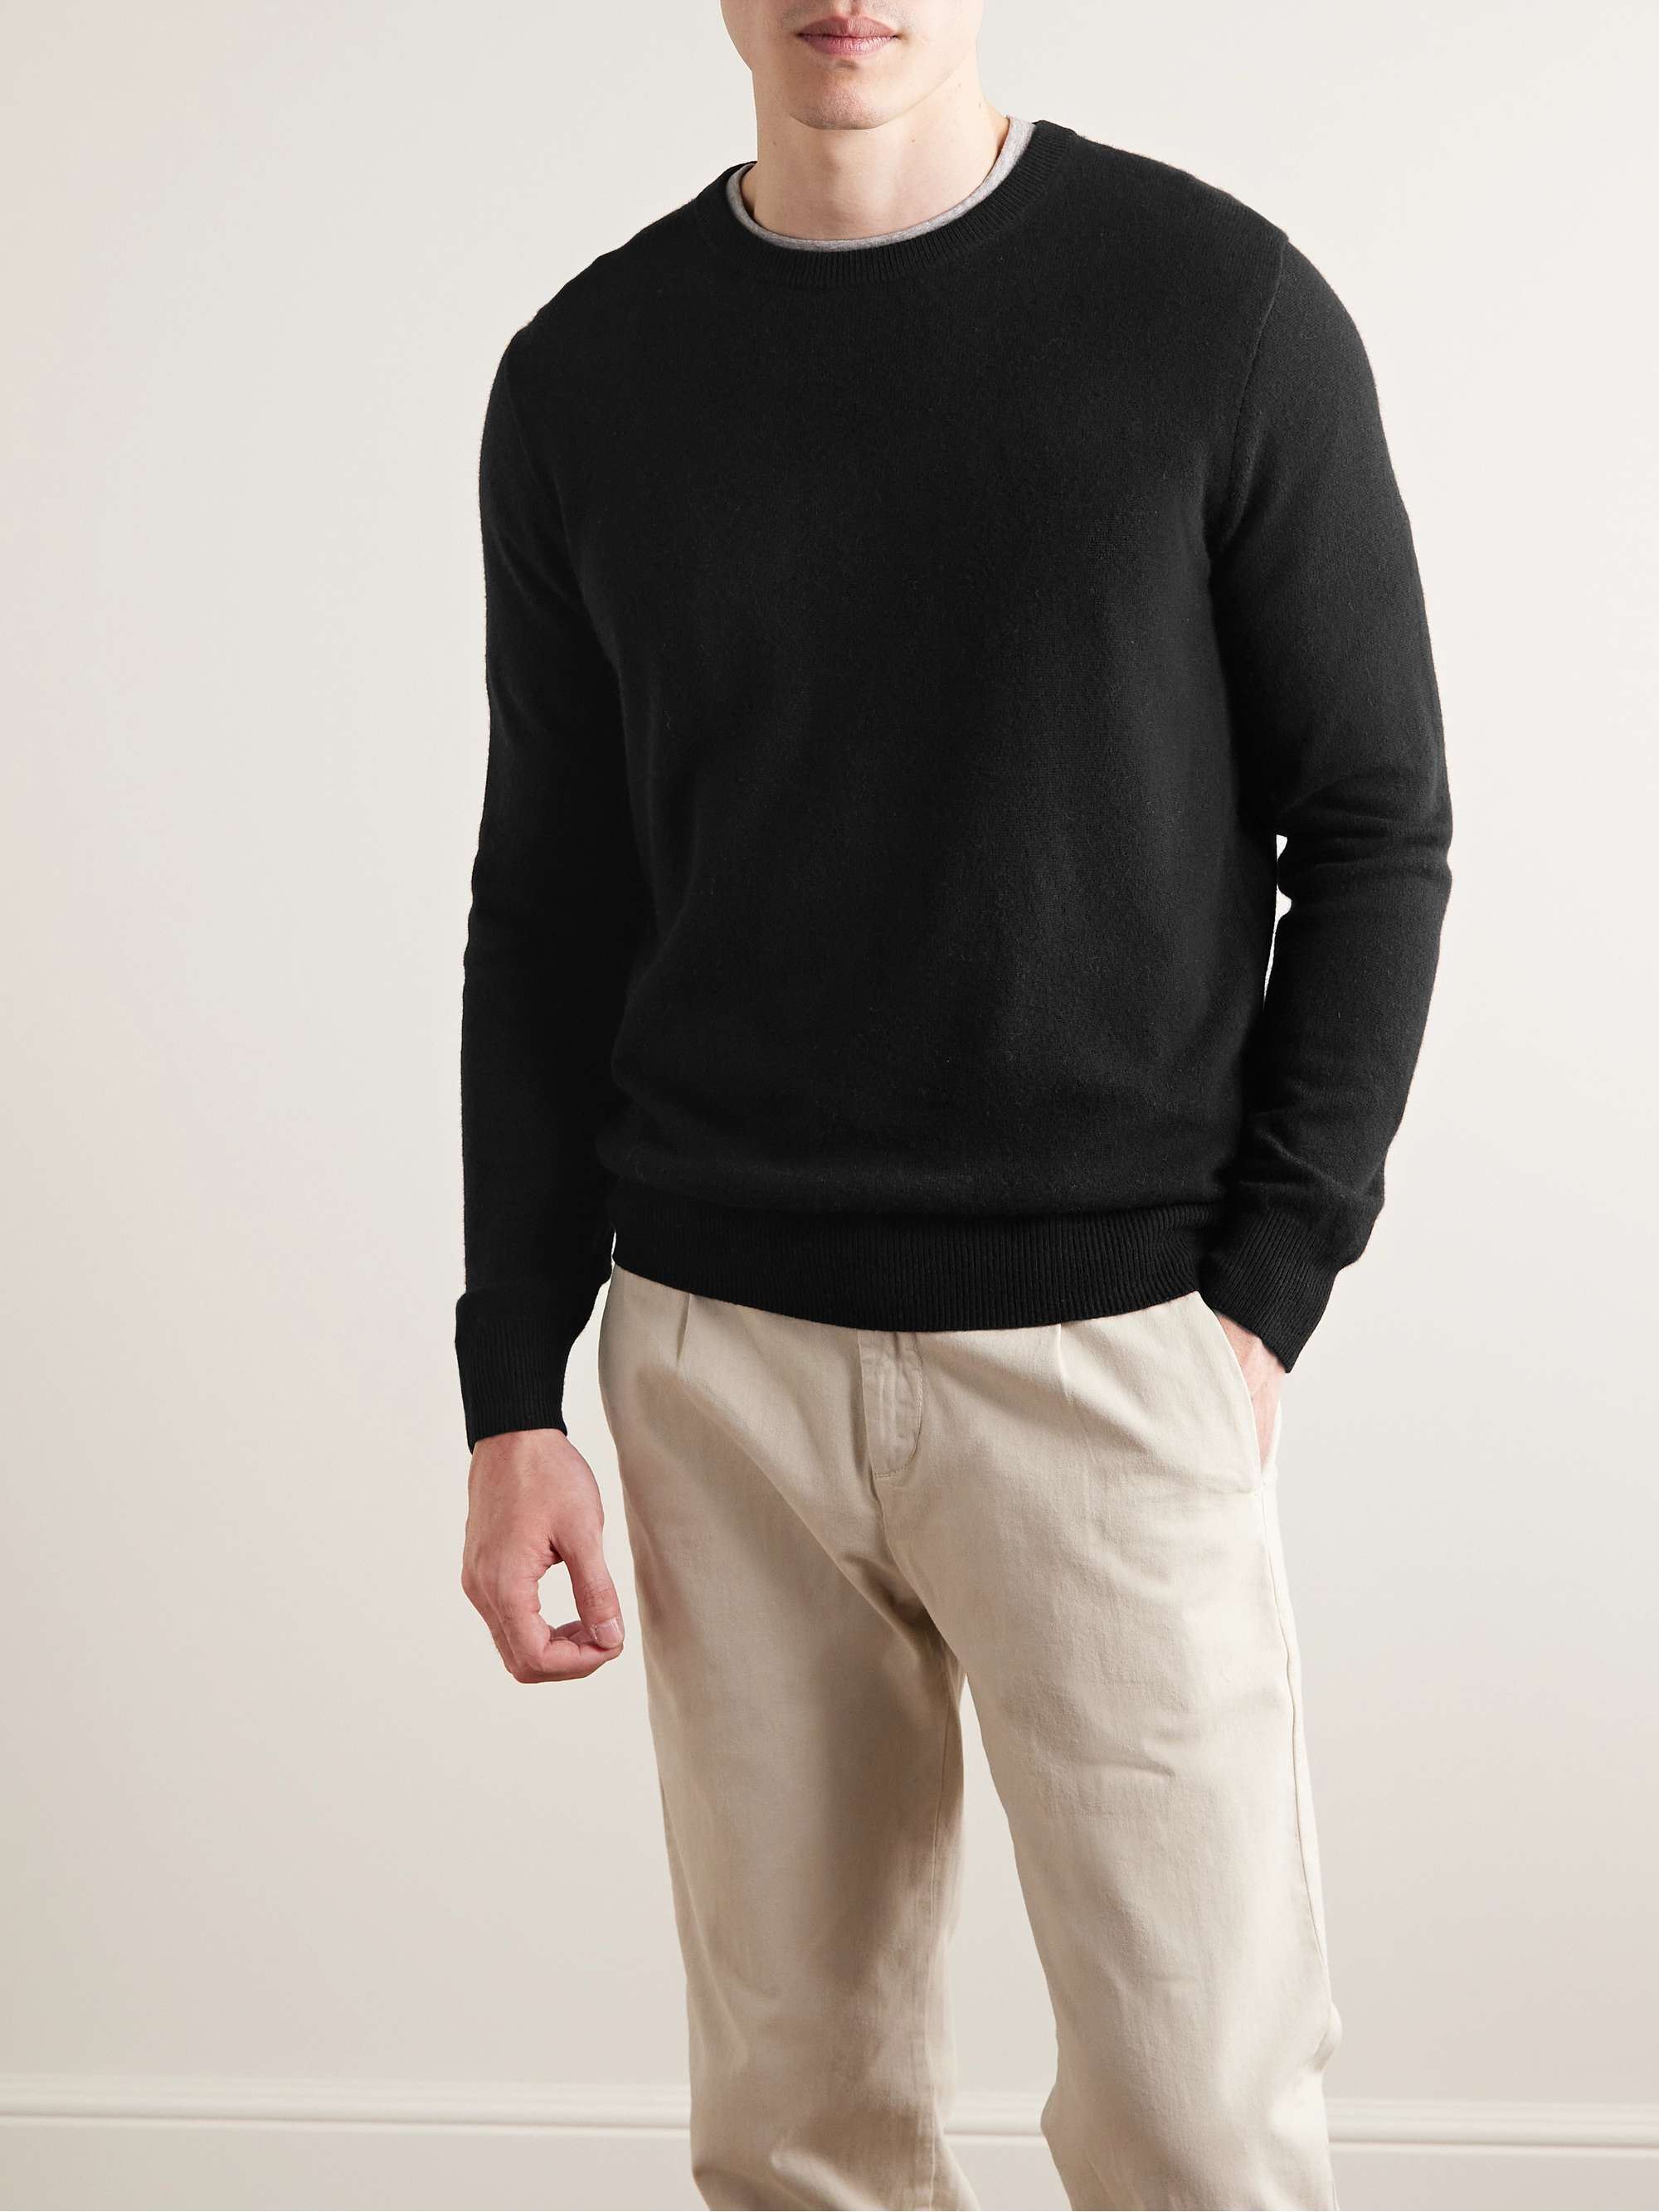 J.CREW Cashmere Sweater